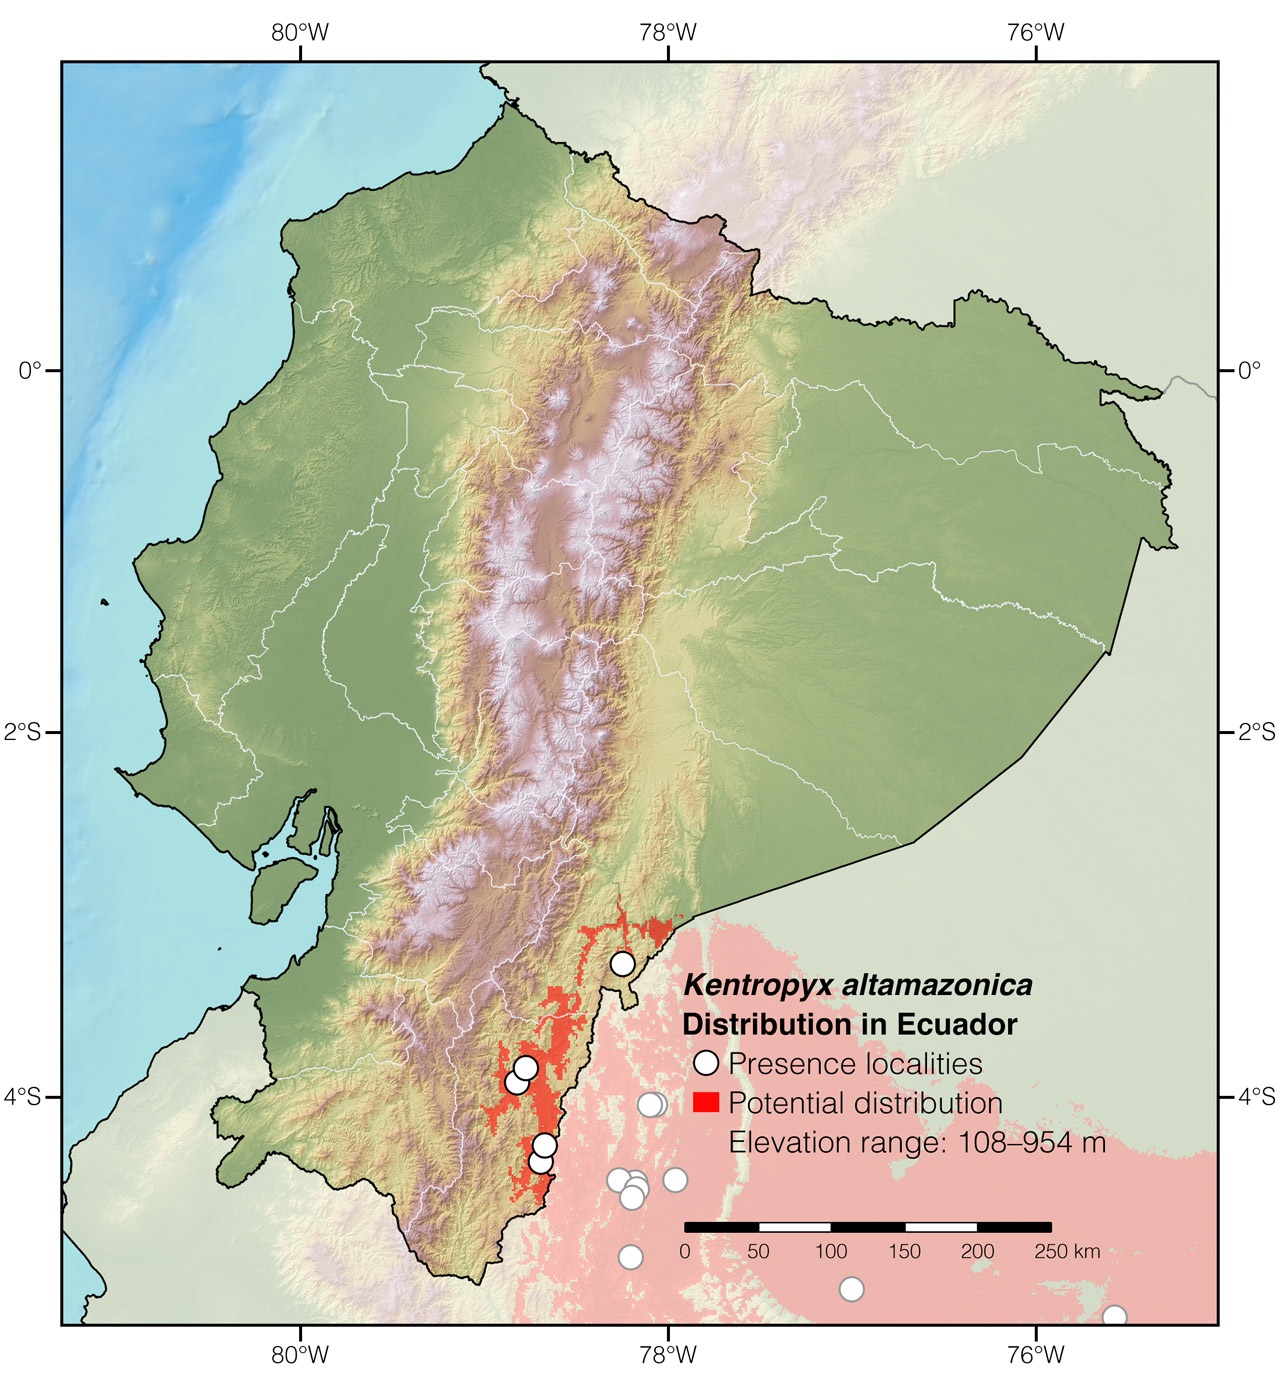 Distribution of Kentropyx altamazonica in Ecuador